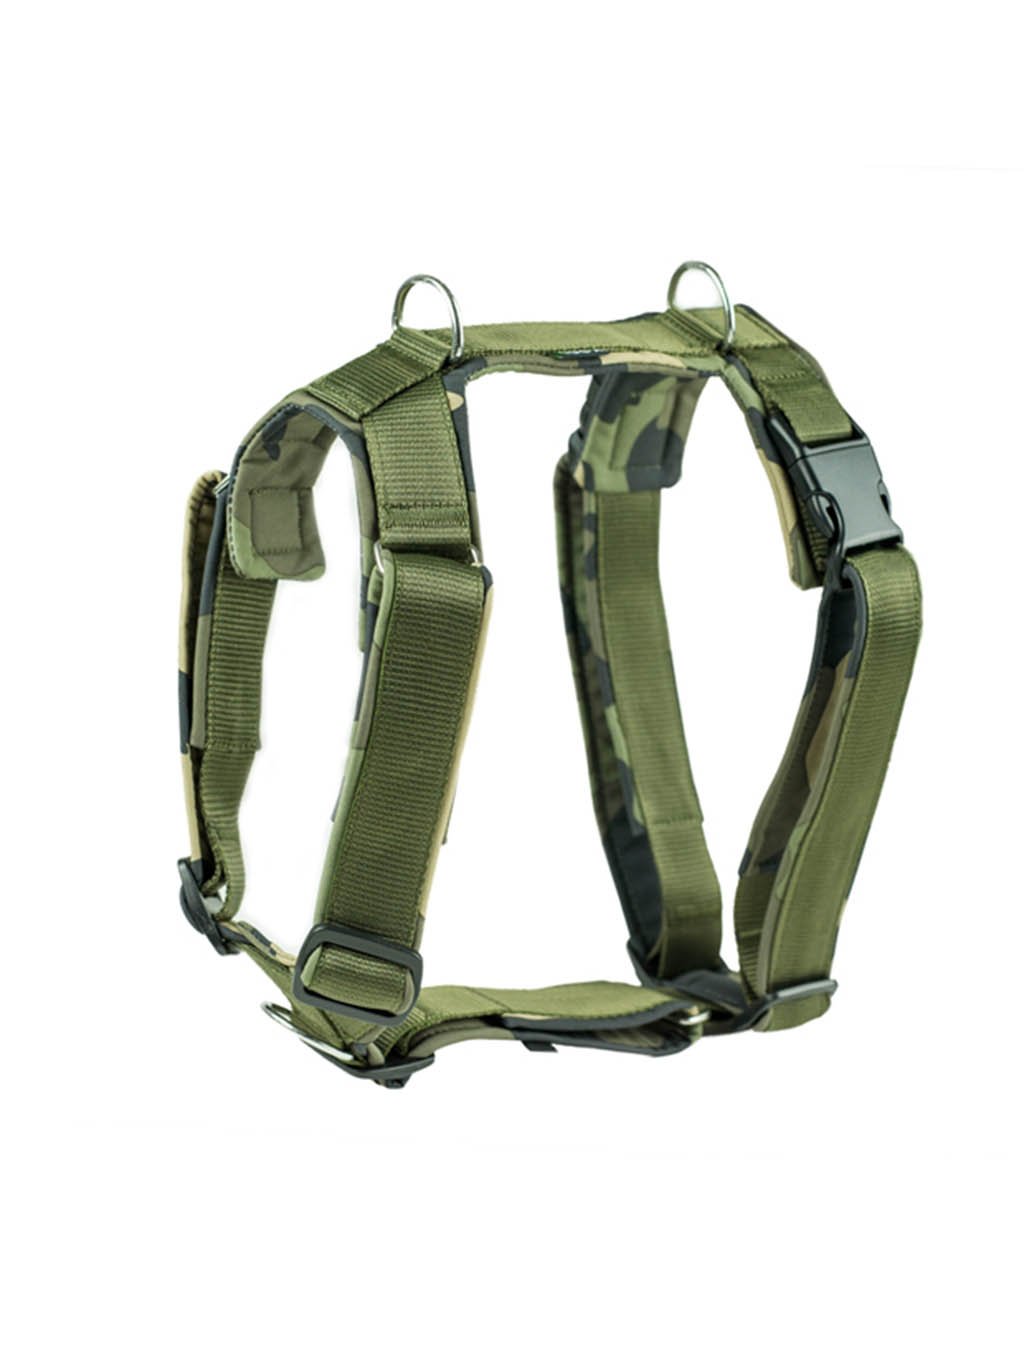 Comfort plus harness - olive